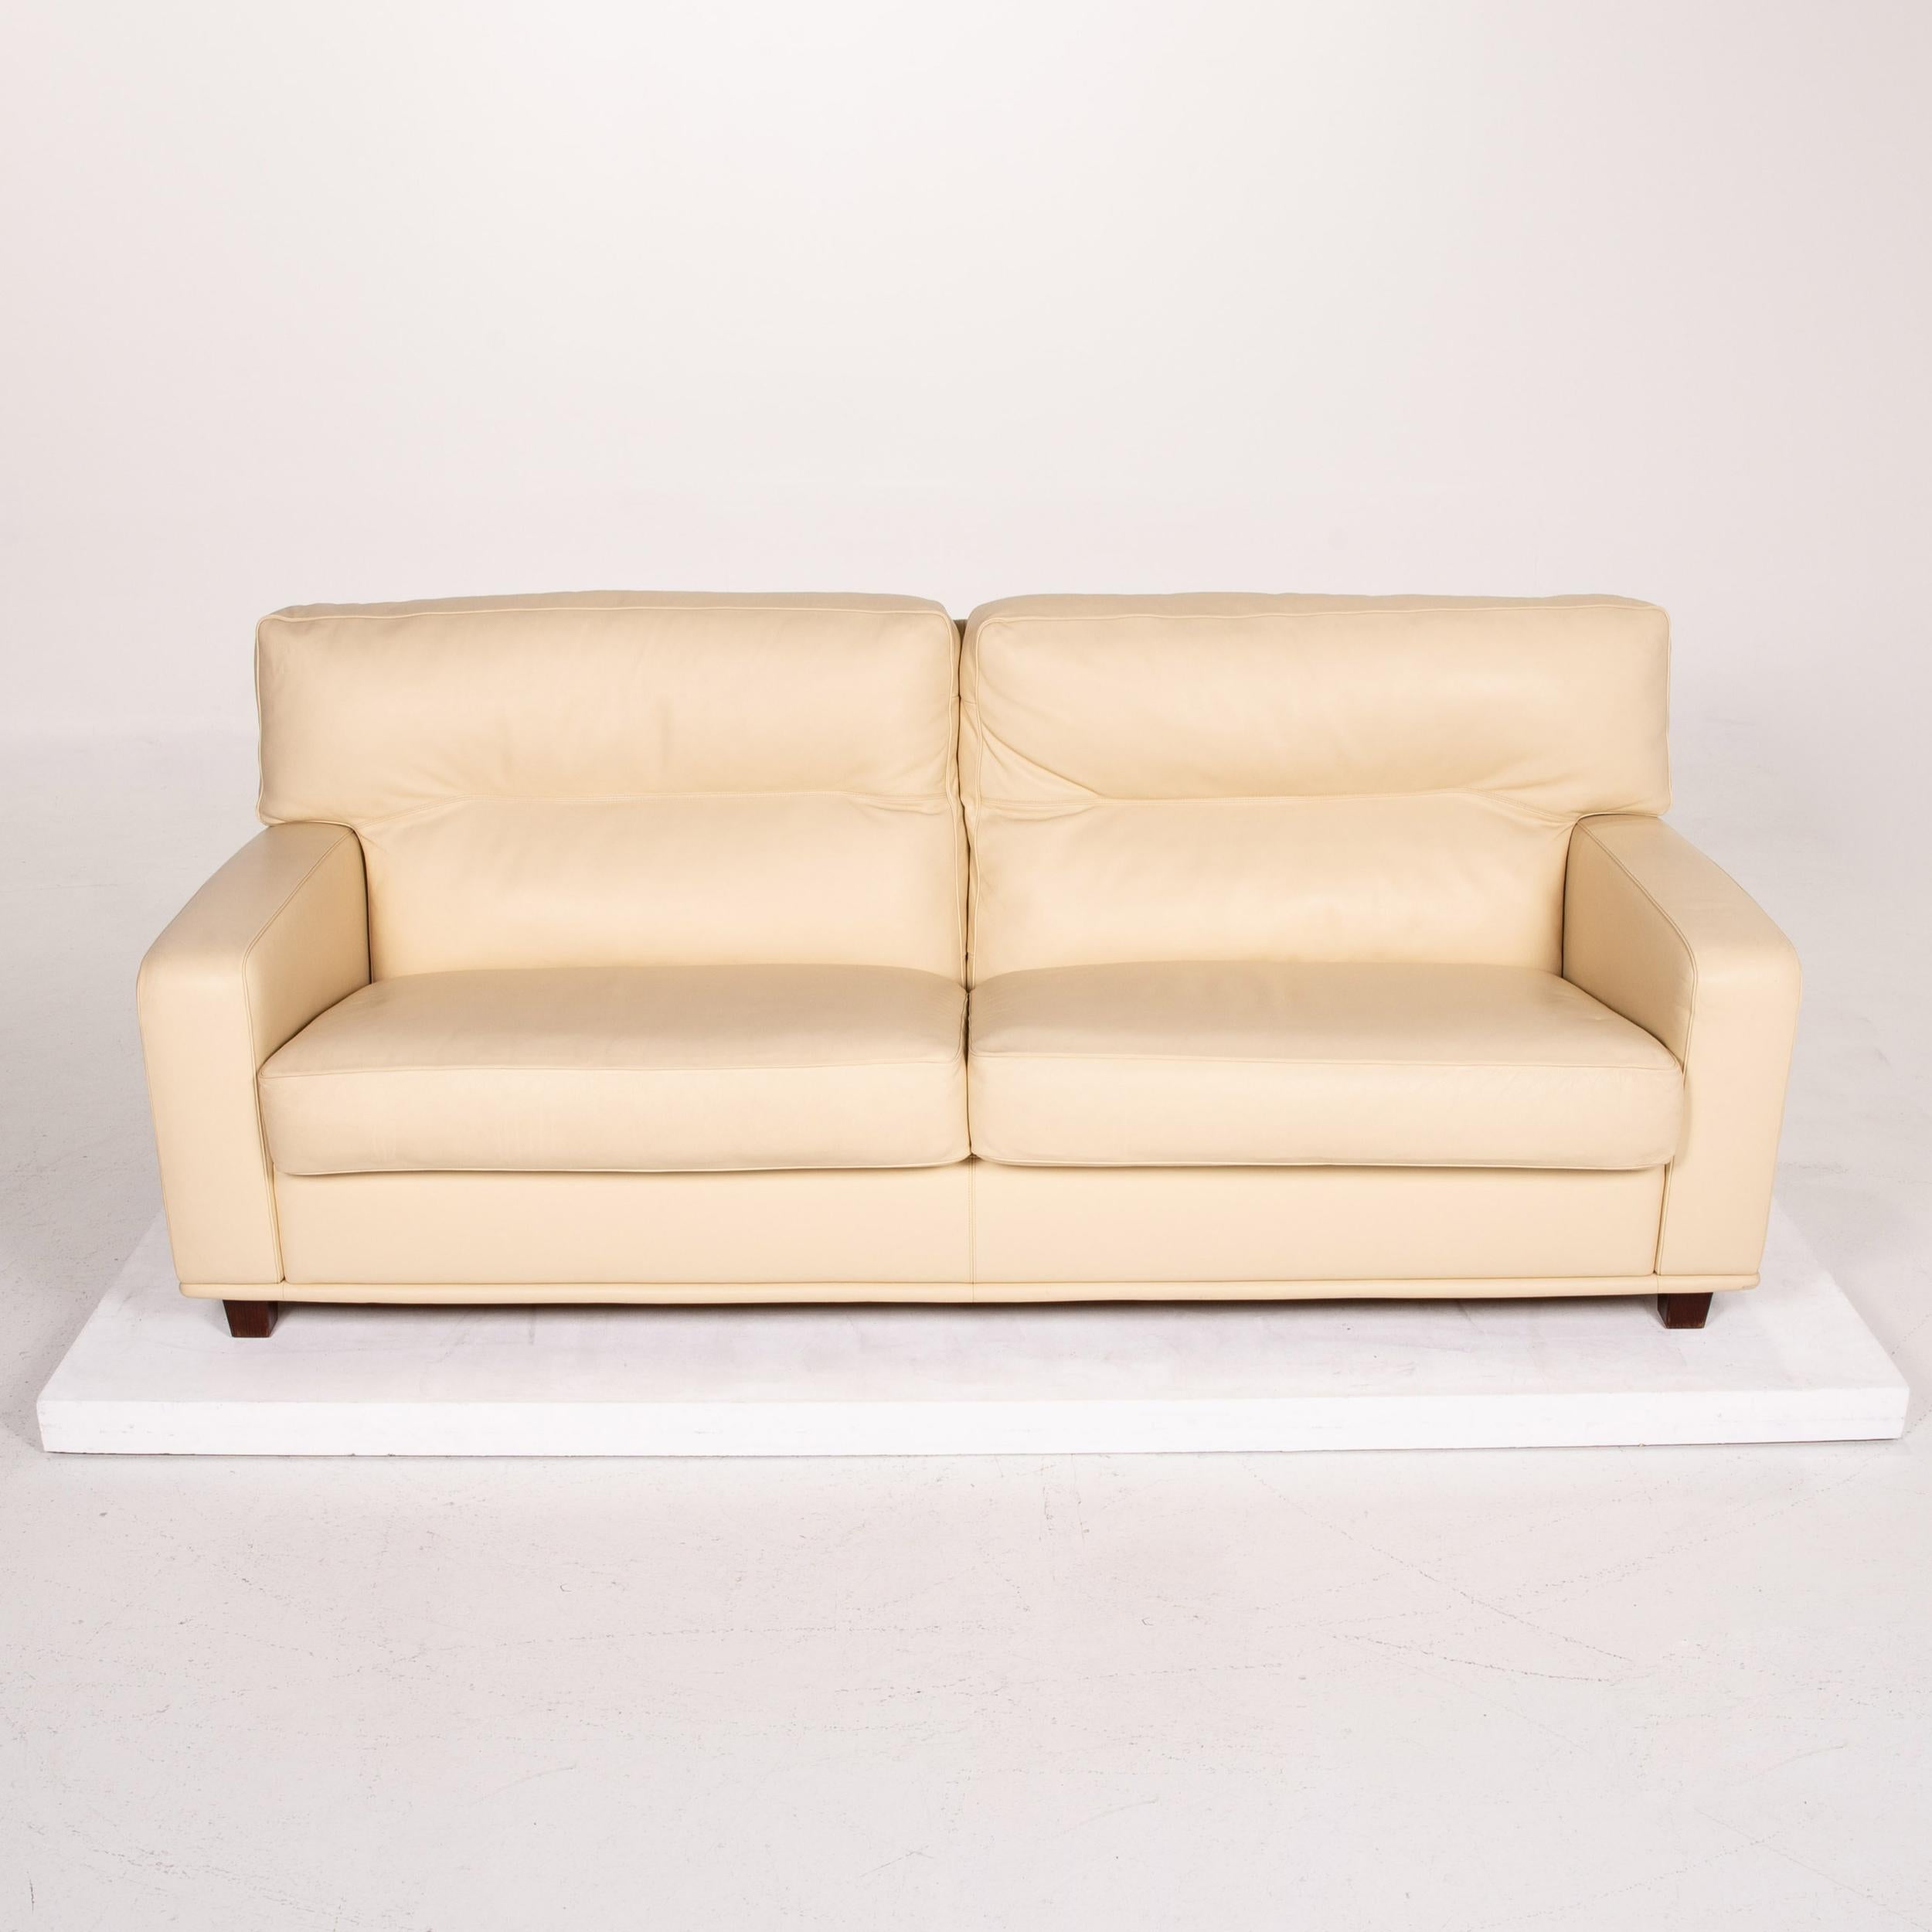 Poltrona Frau Leather Sofa Cream Two-Seat Couch 3